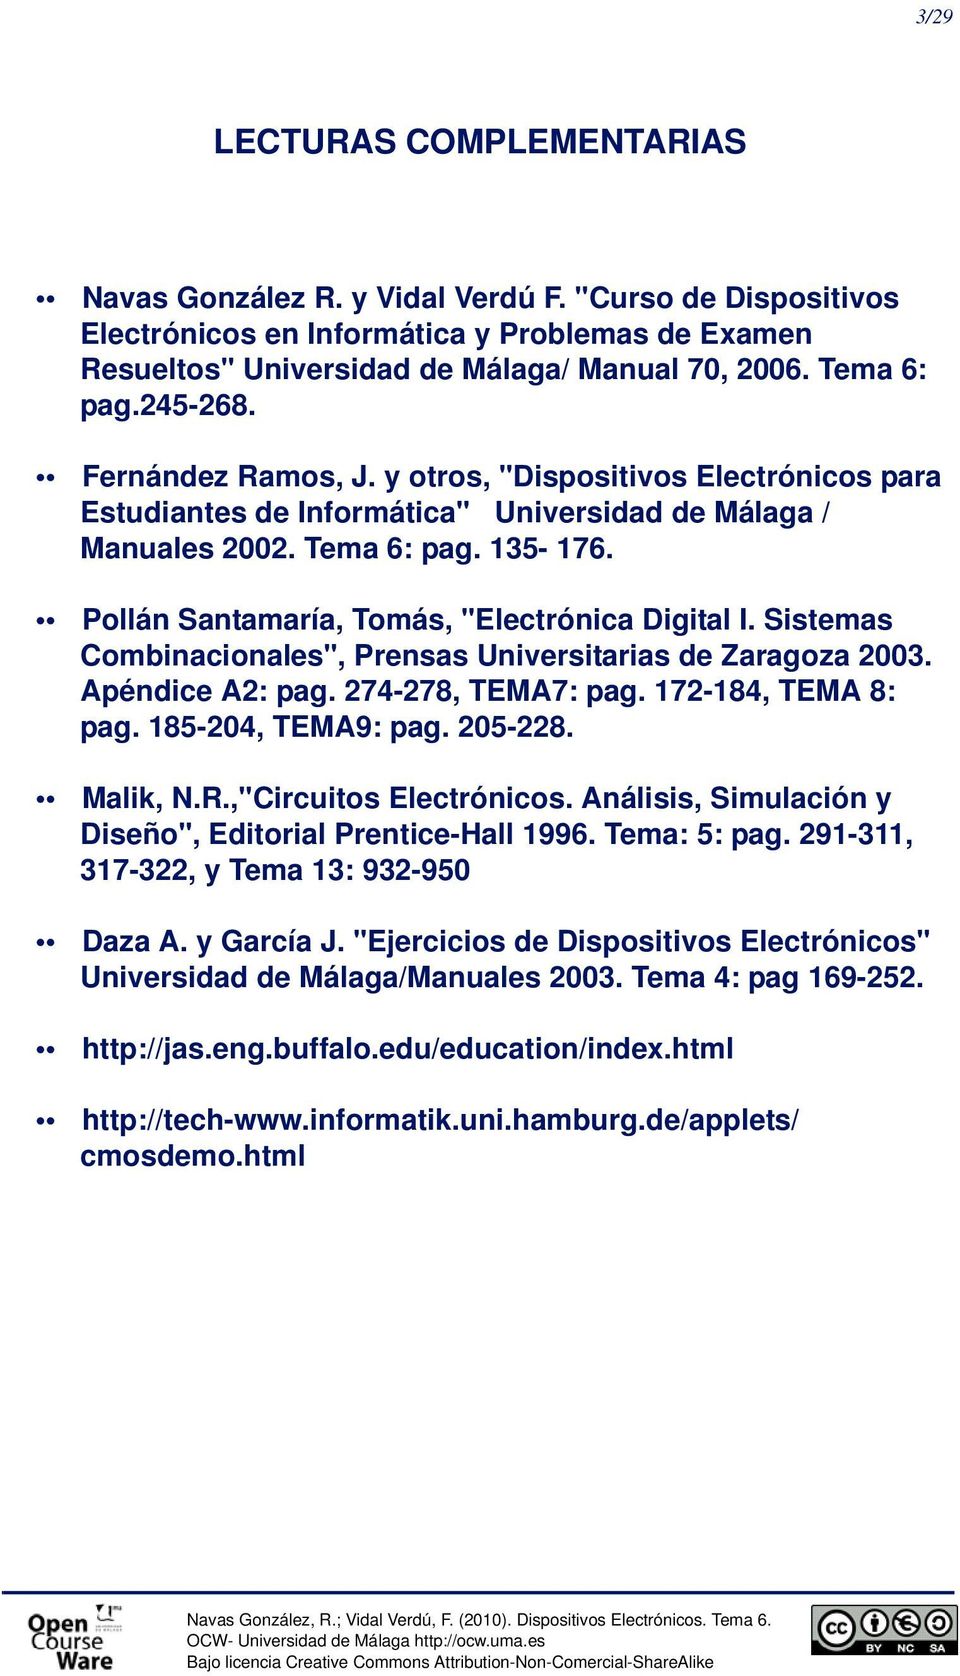 istemas Combinacionales", Prensas Universitarias de Zaragoza 003. péndice : pag. 7478, TEM7: pag. 17184, TEM 8: pag. 18504, TEM9: pag. 058. Malik, N.R.,"Circuitos Electrónicos.